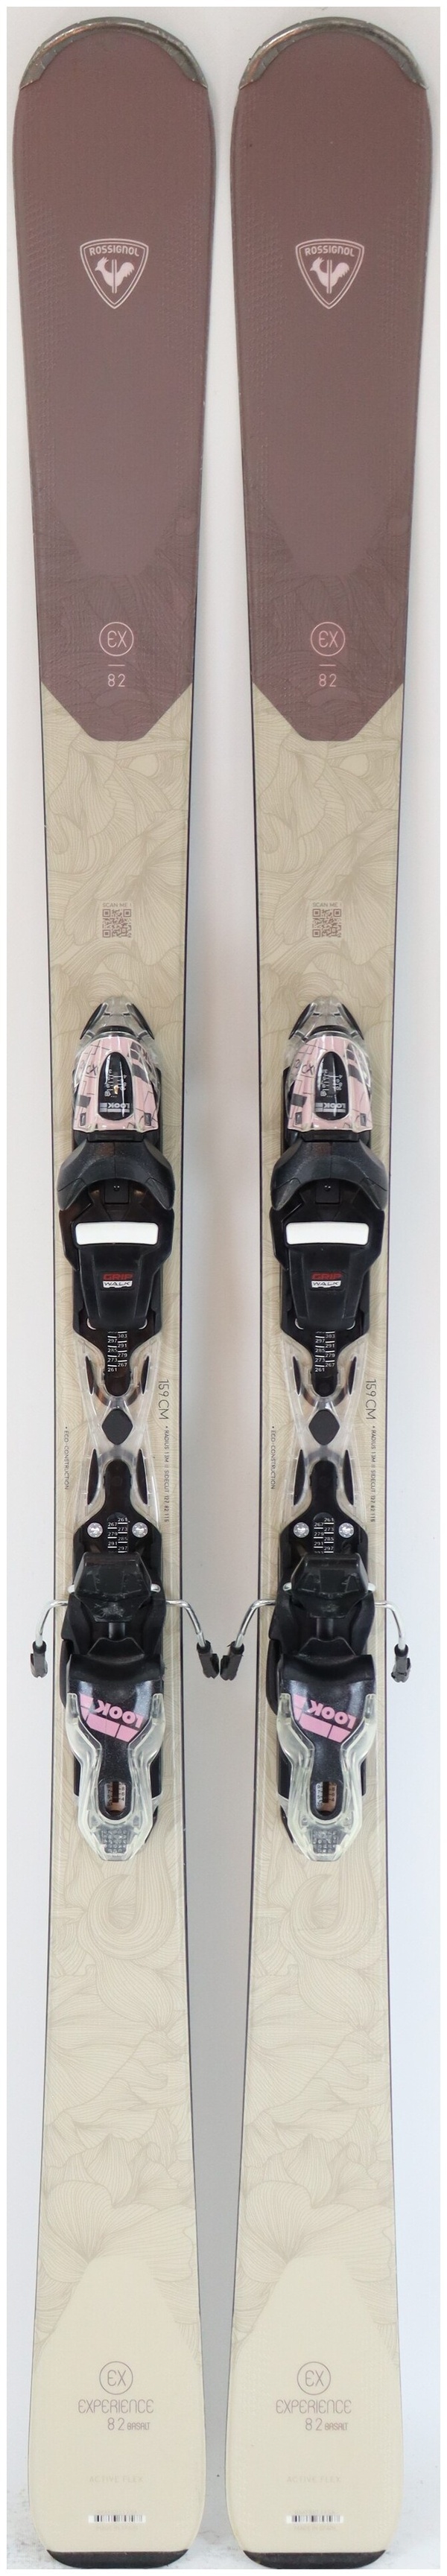 2022, Rossignol, Experience W 82 Basalt Women's Skis with Look Xpress 11 GW  Demo Bindings Used Demo Skis 159cm